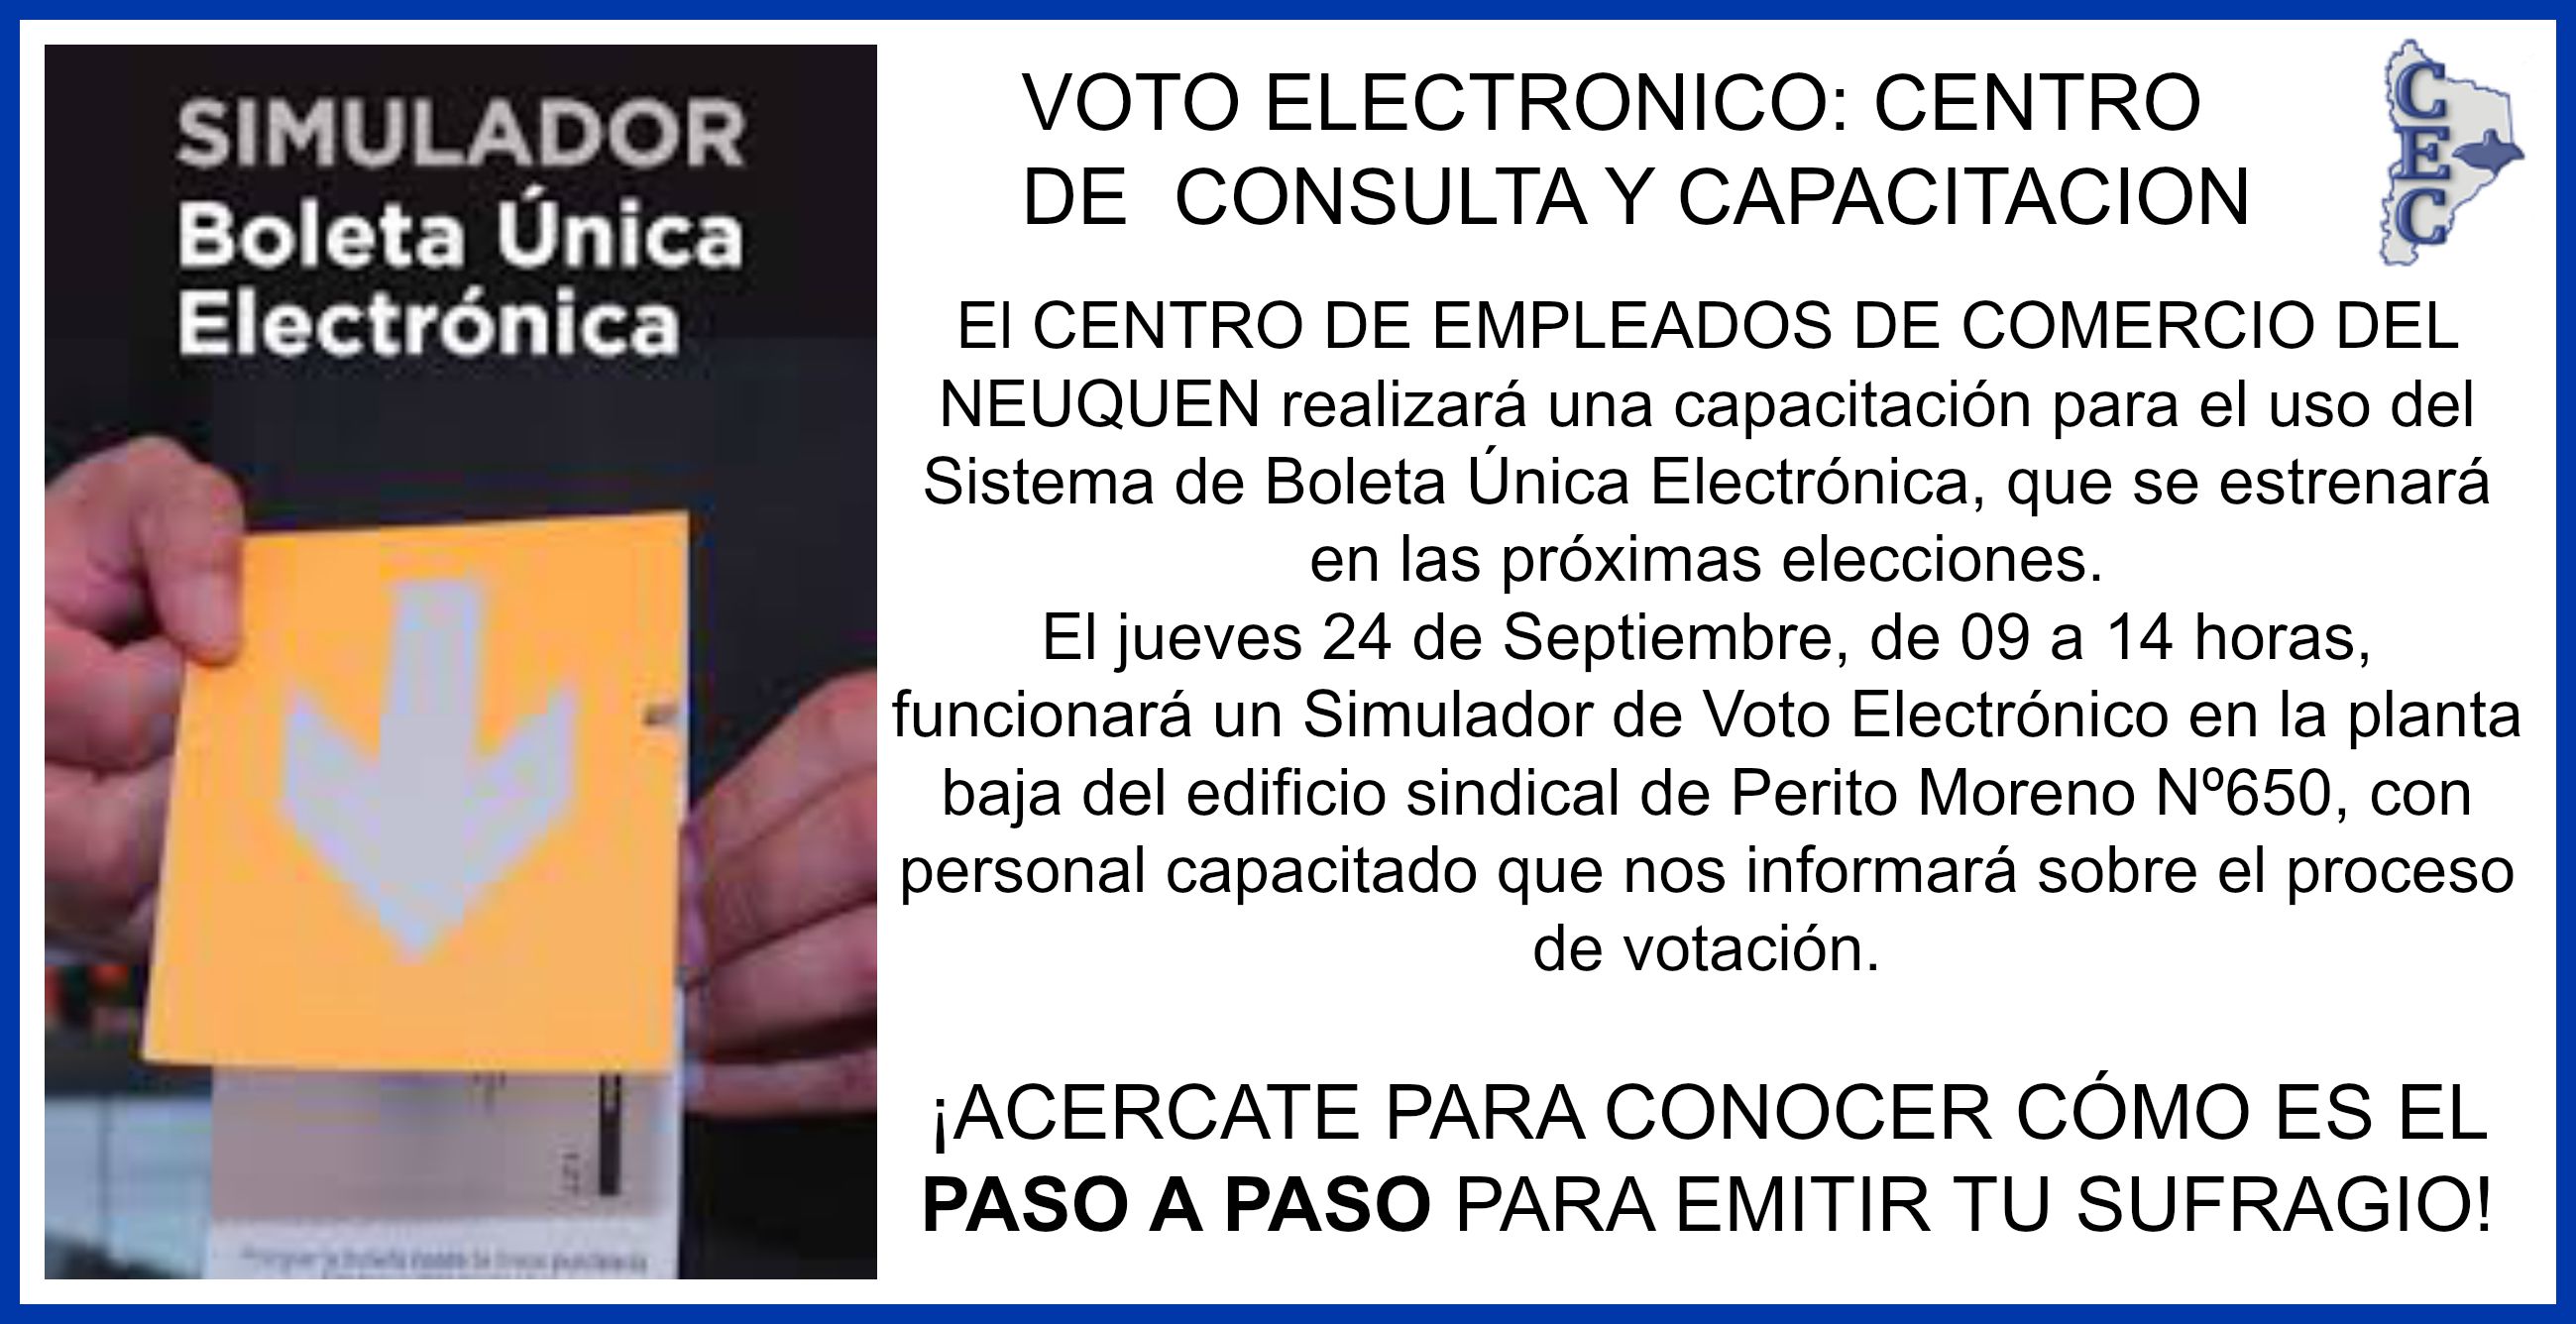 Voto Electronico